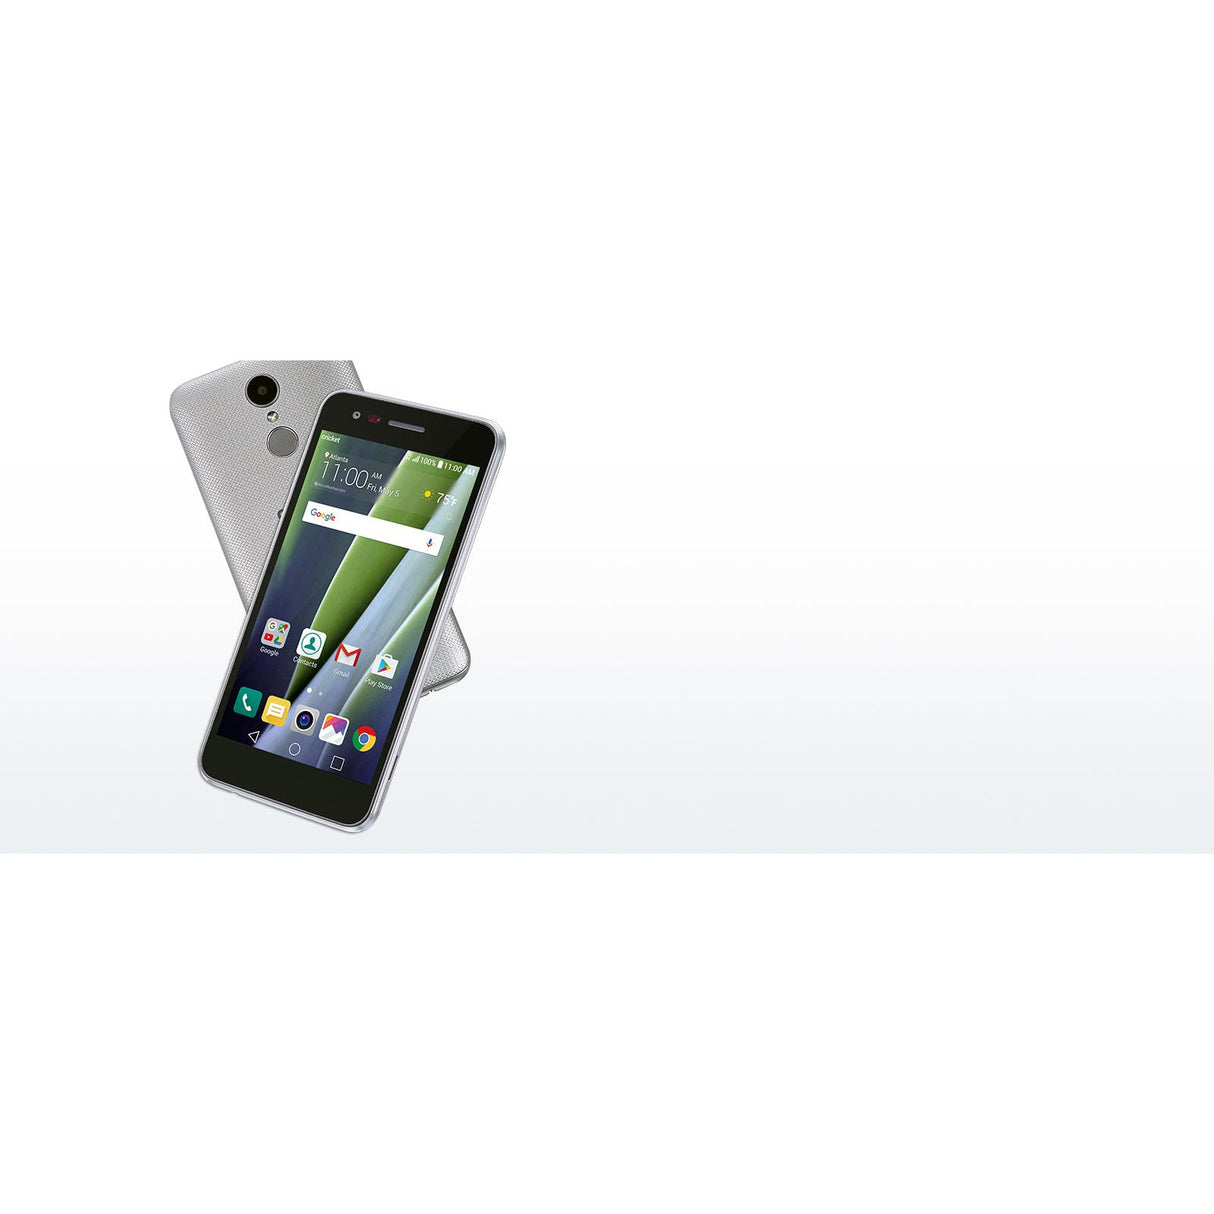 LG Risio 2 - 16 GB - Silver - Cricket Wireless - GSM